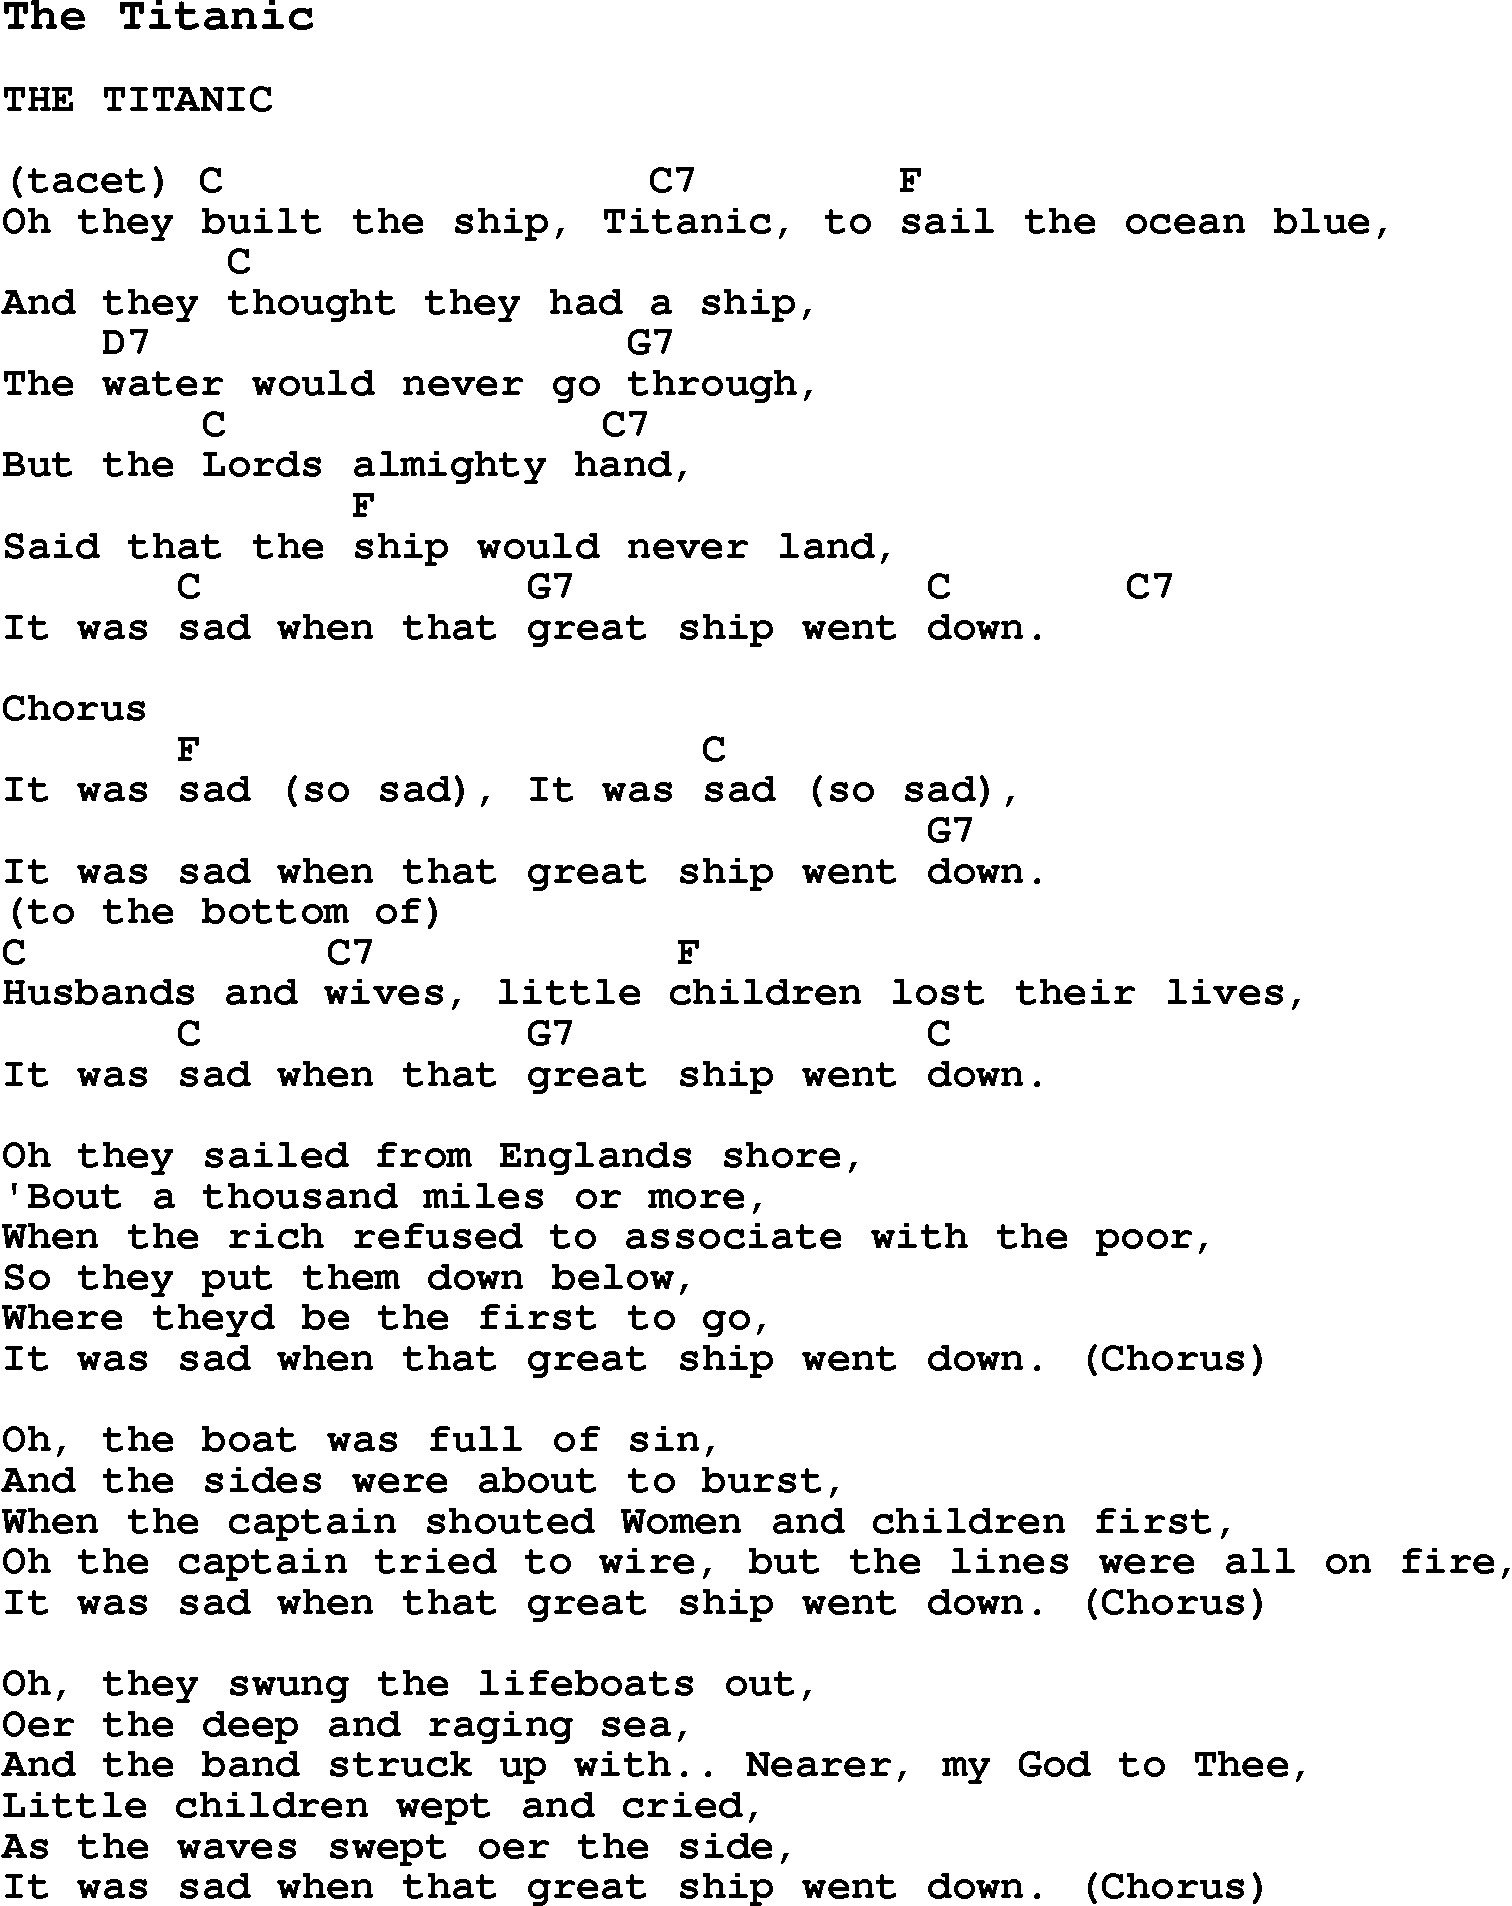 Summer Camp Song, The Titanic, with lyrics and chords for Ukulele